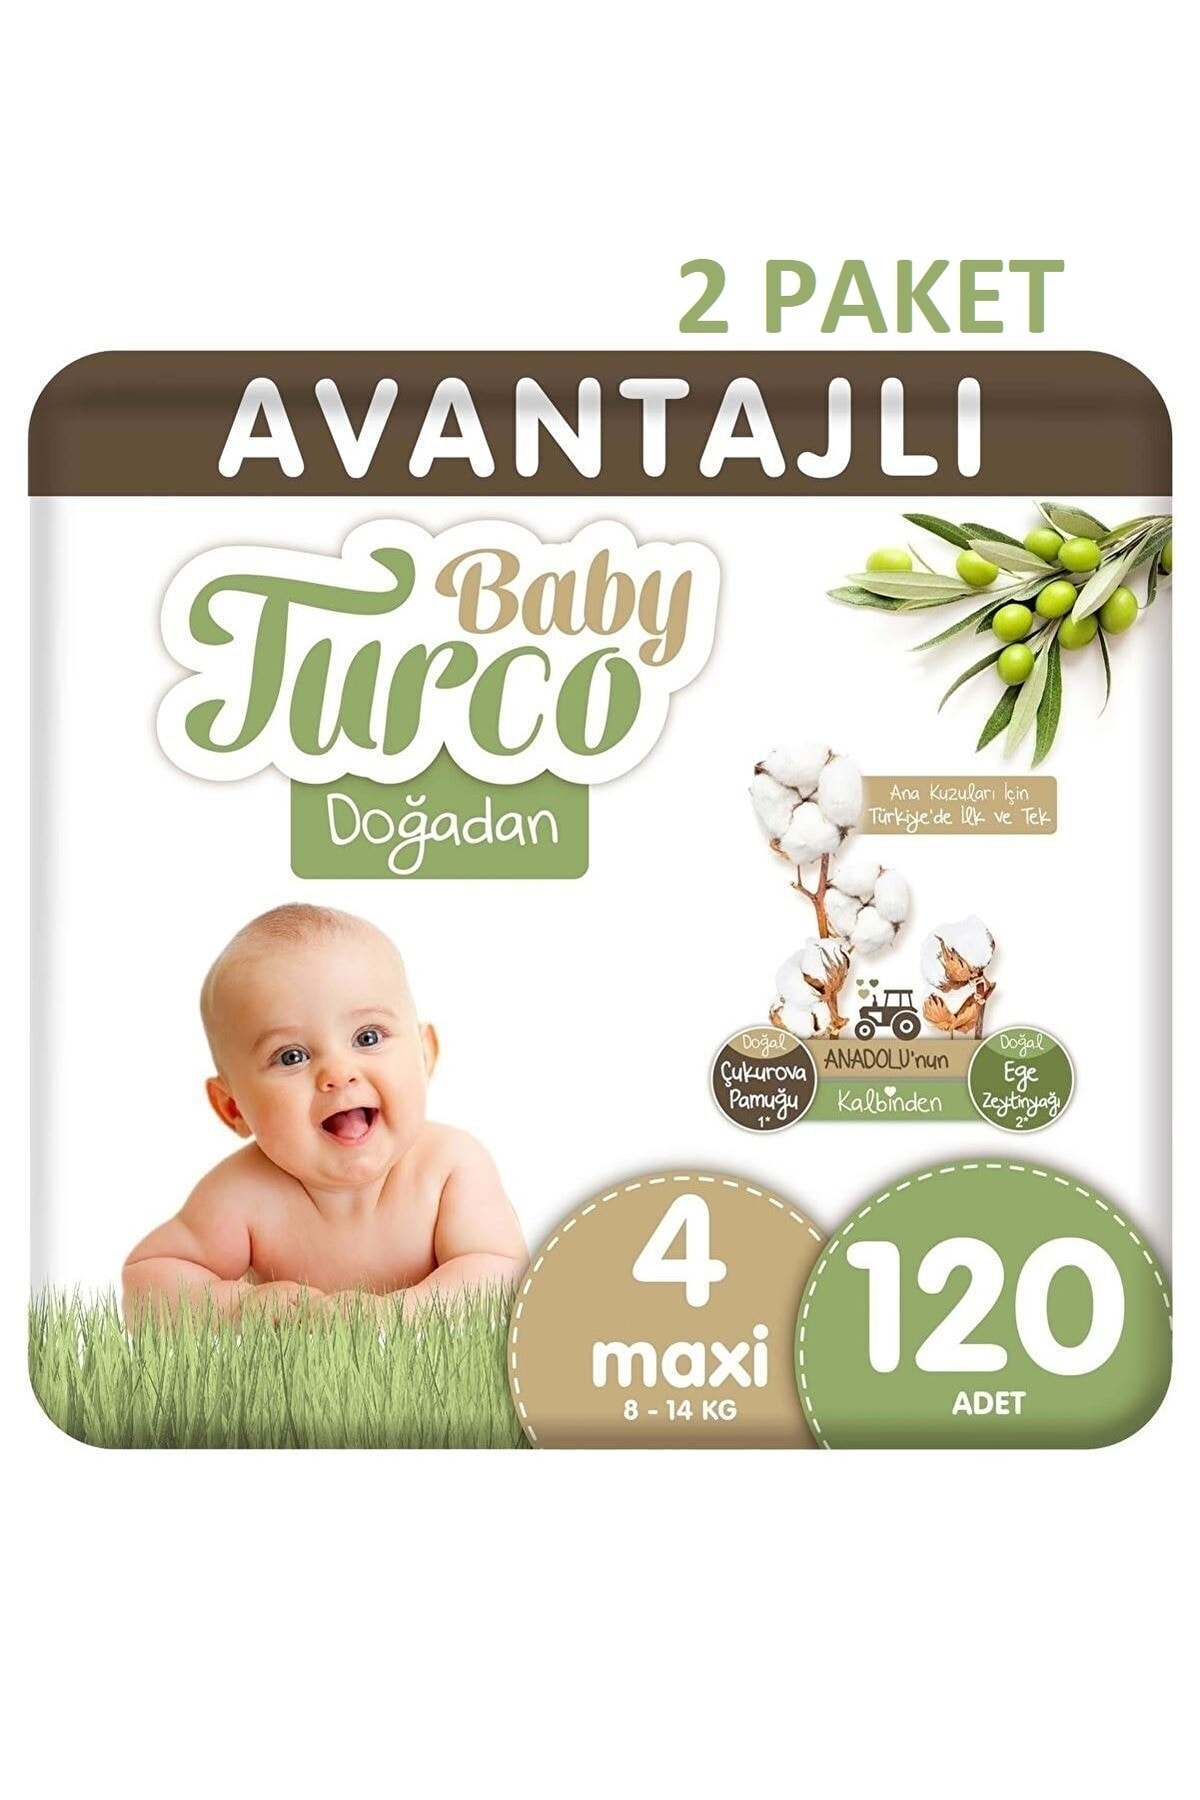 Baby Turco Doğadan Avantajlı Bebek Bezi 4 Numara Maxi 120*2 240 Adet 2 Paket